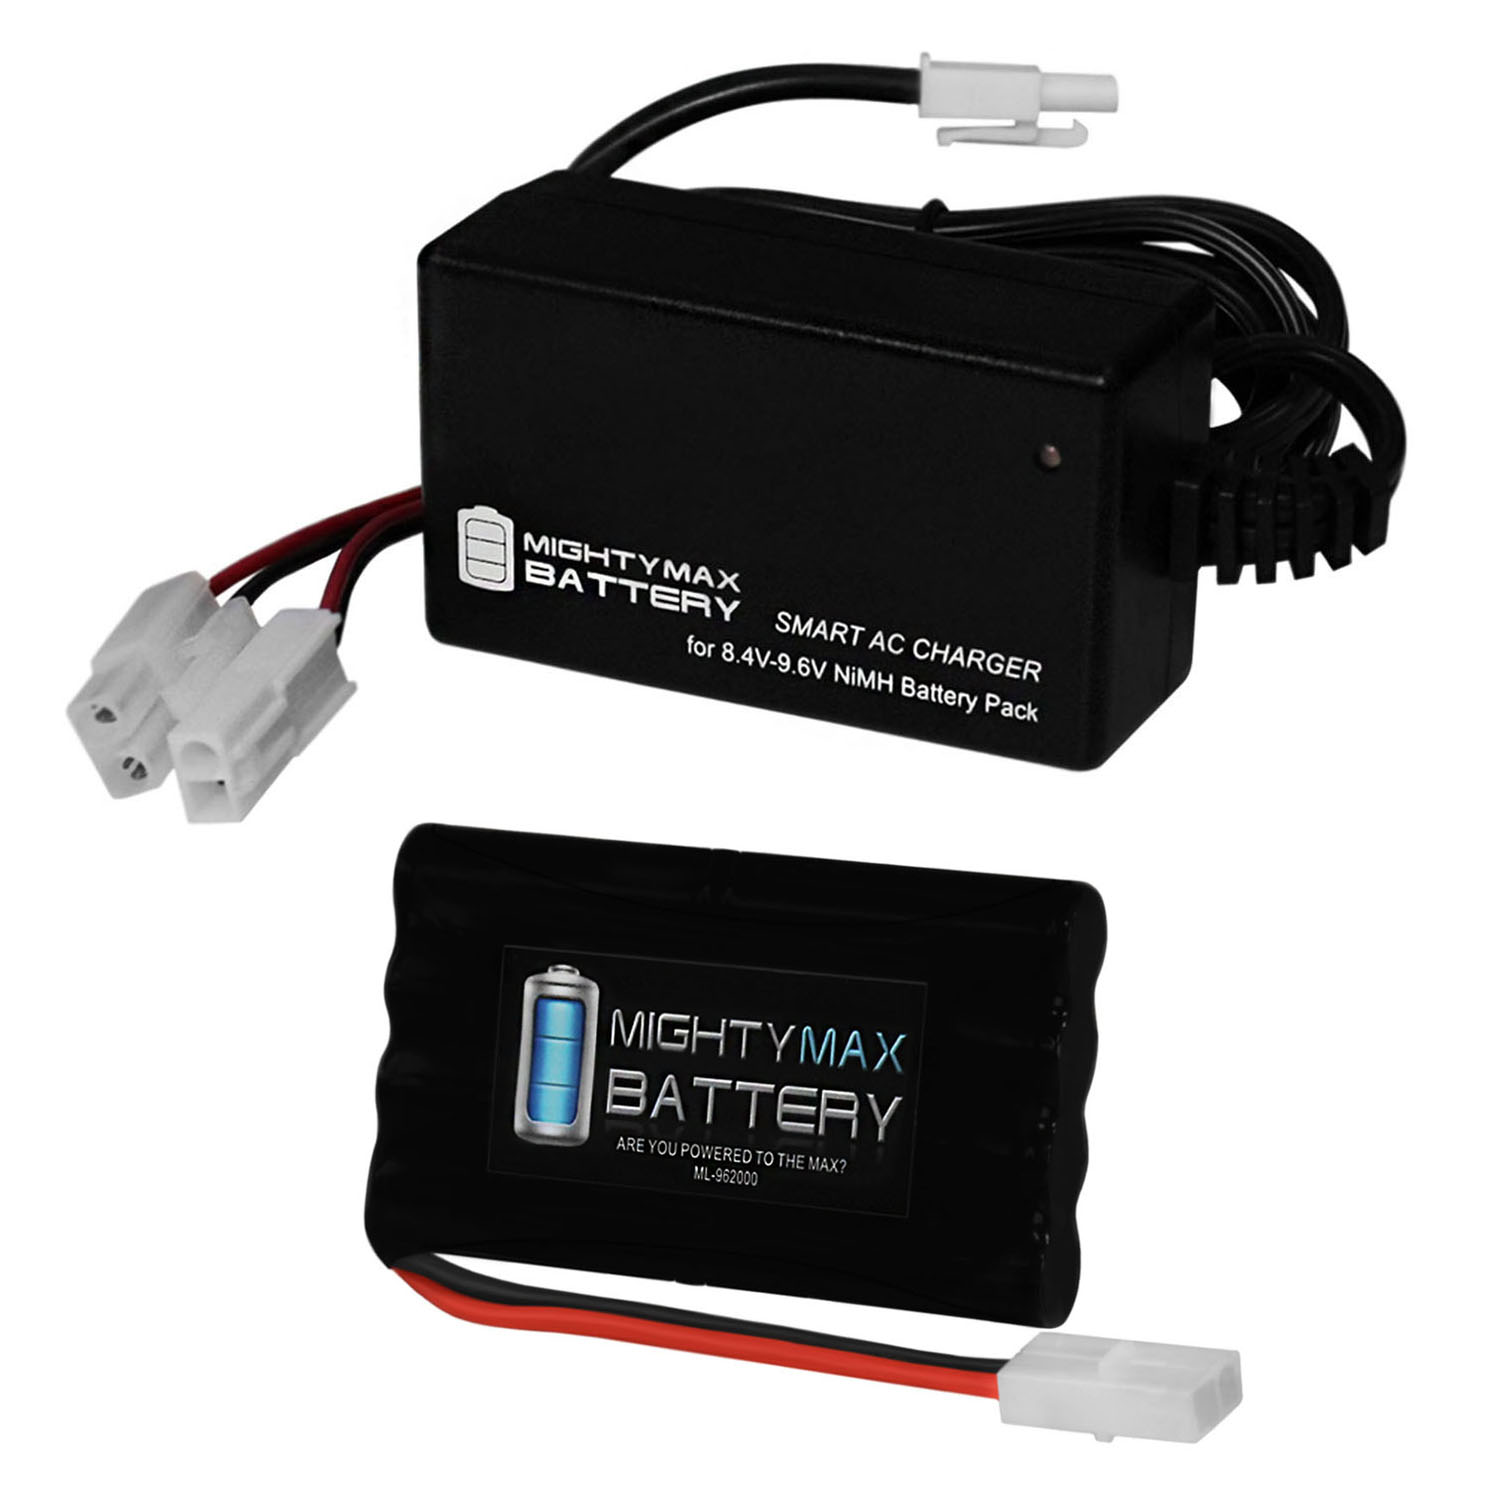 9.6V 2000mAh NiMH Battery for RC Car, Robots, etc + Smart Charger